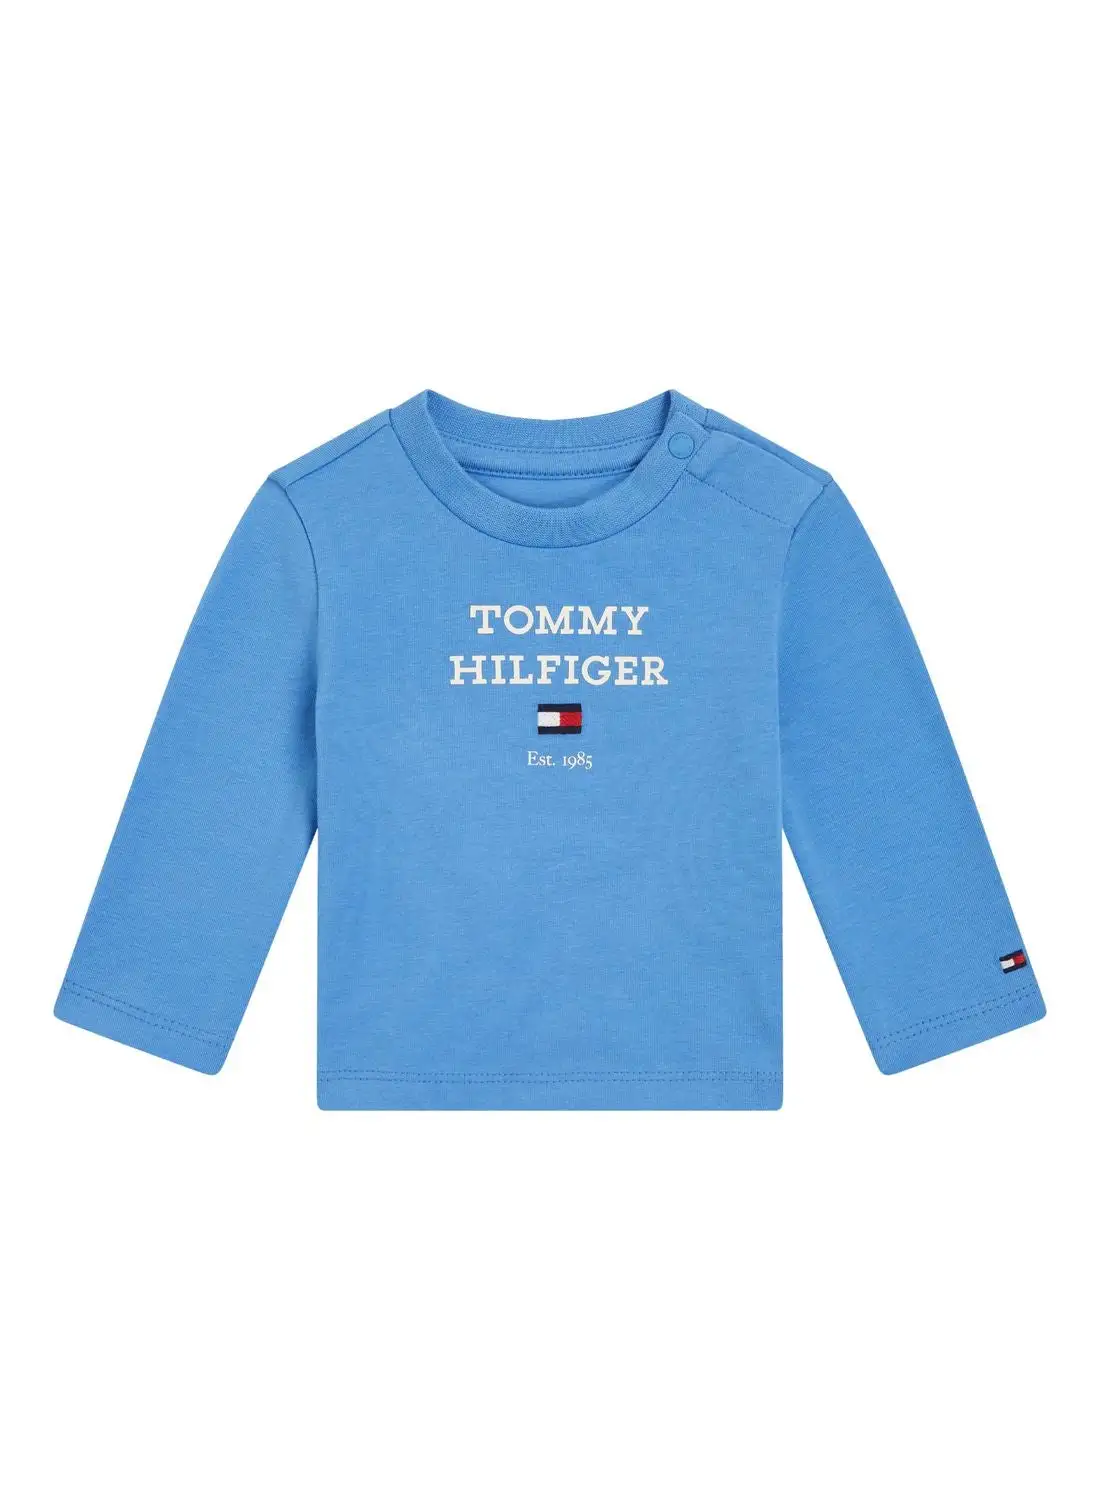 TOMMY HILFIGER Kids Logo Crew Neck T-Shirt